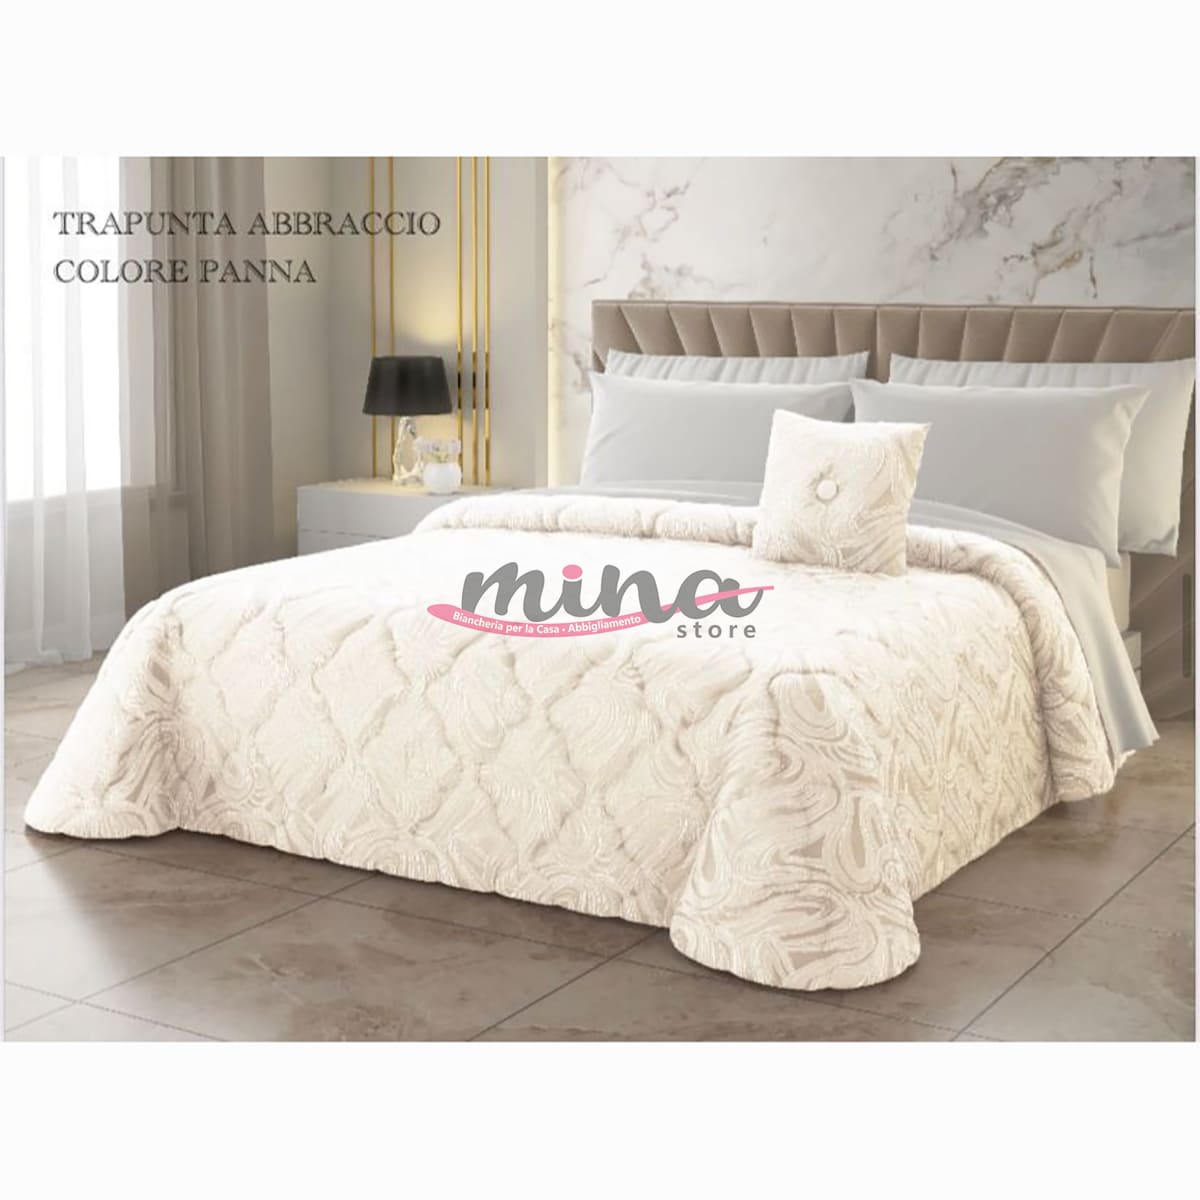 Trapunta invernale Matrimoniale Laura Blasi modello ABBRACCIO PANNA 100% Made in Italy Qualità Premium 0918